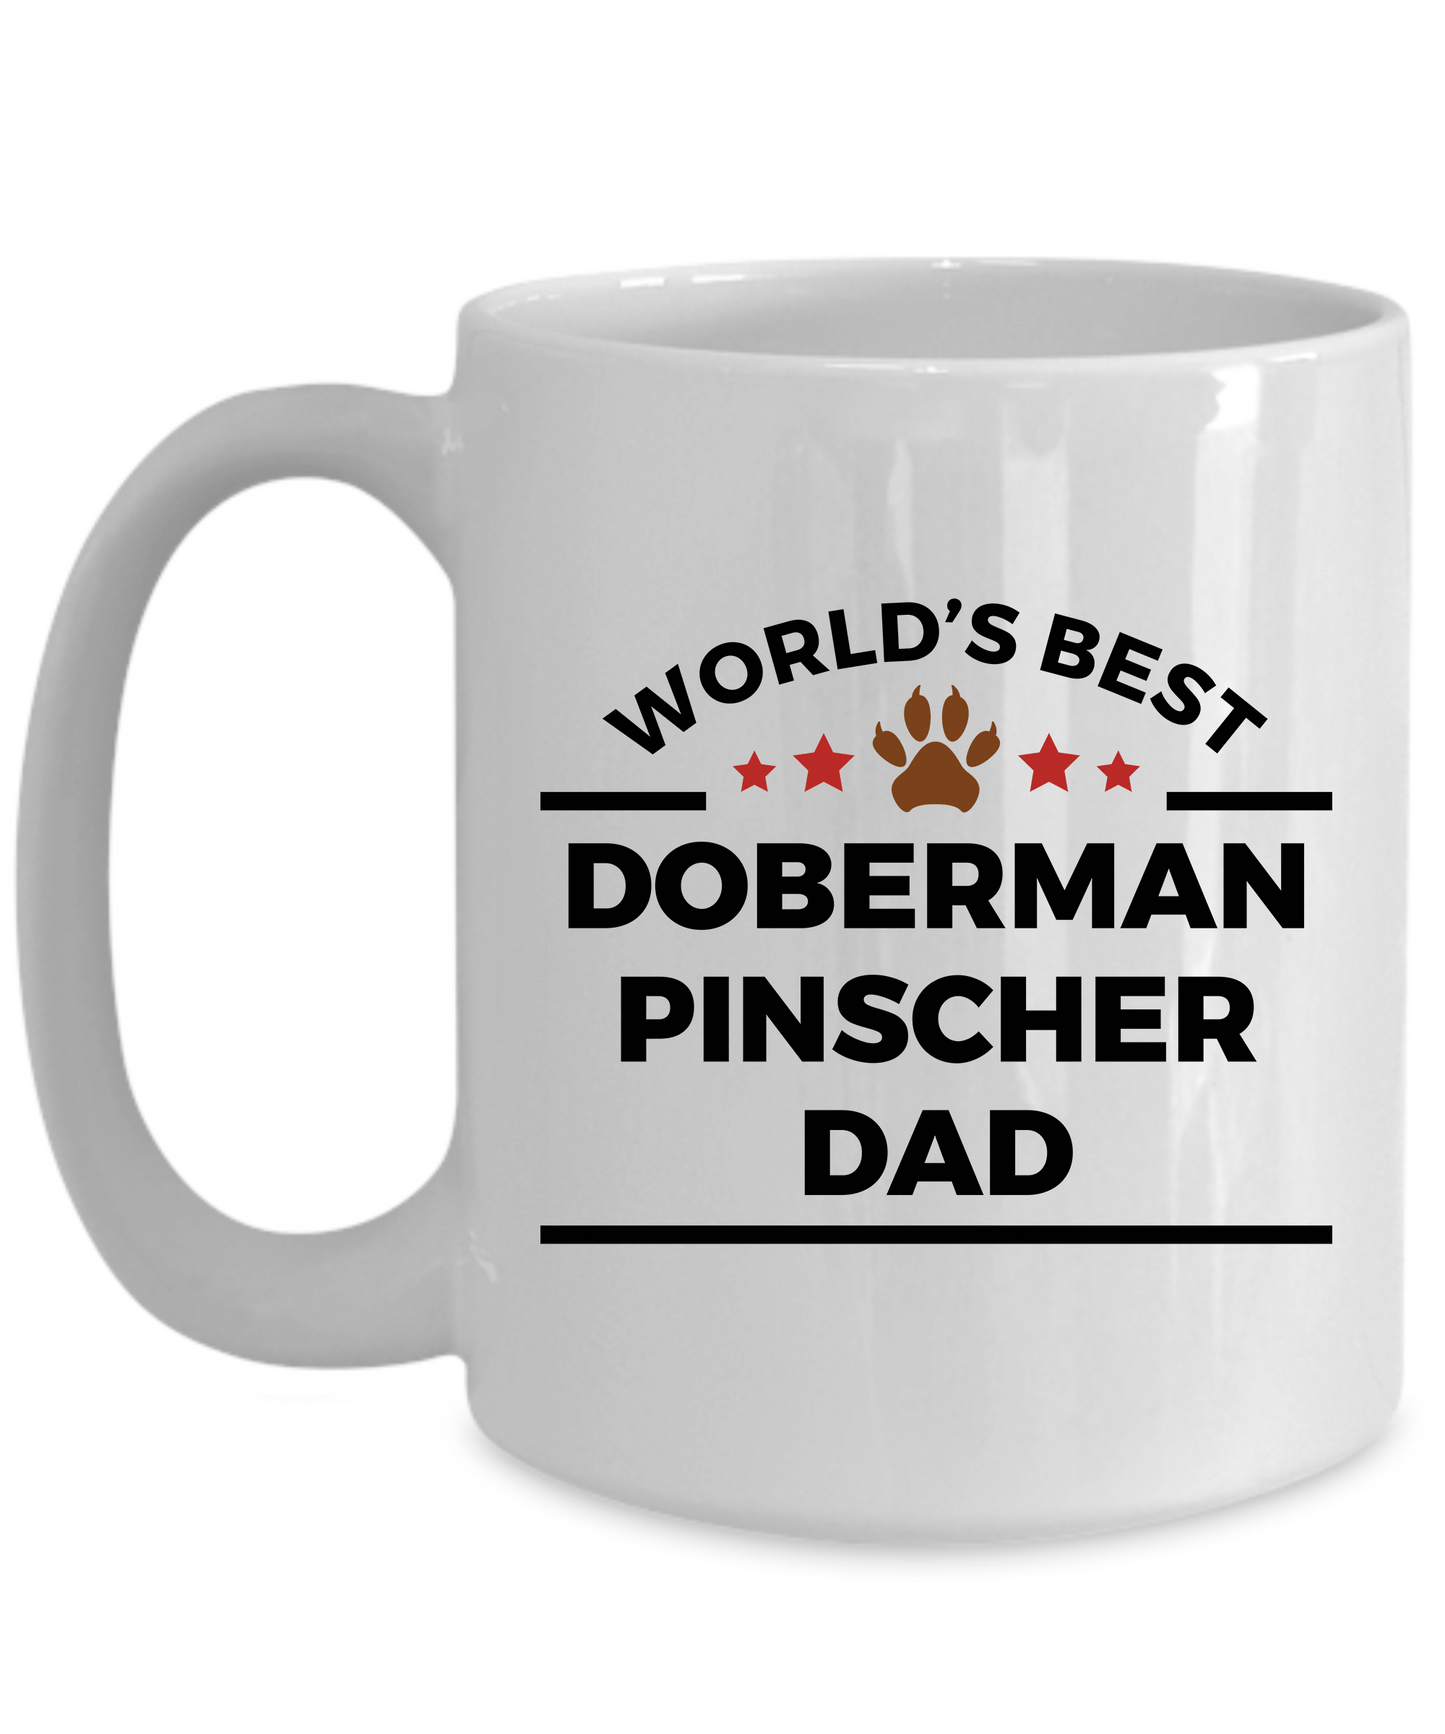 Doberman Pinscher Dog Dad Coffee Mug